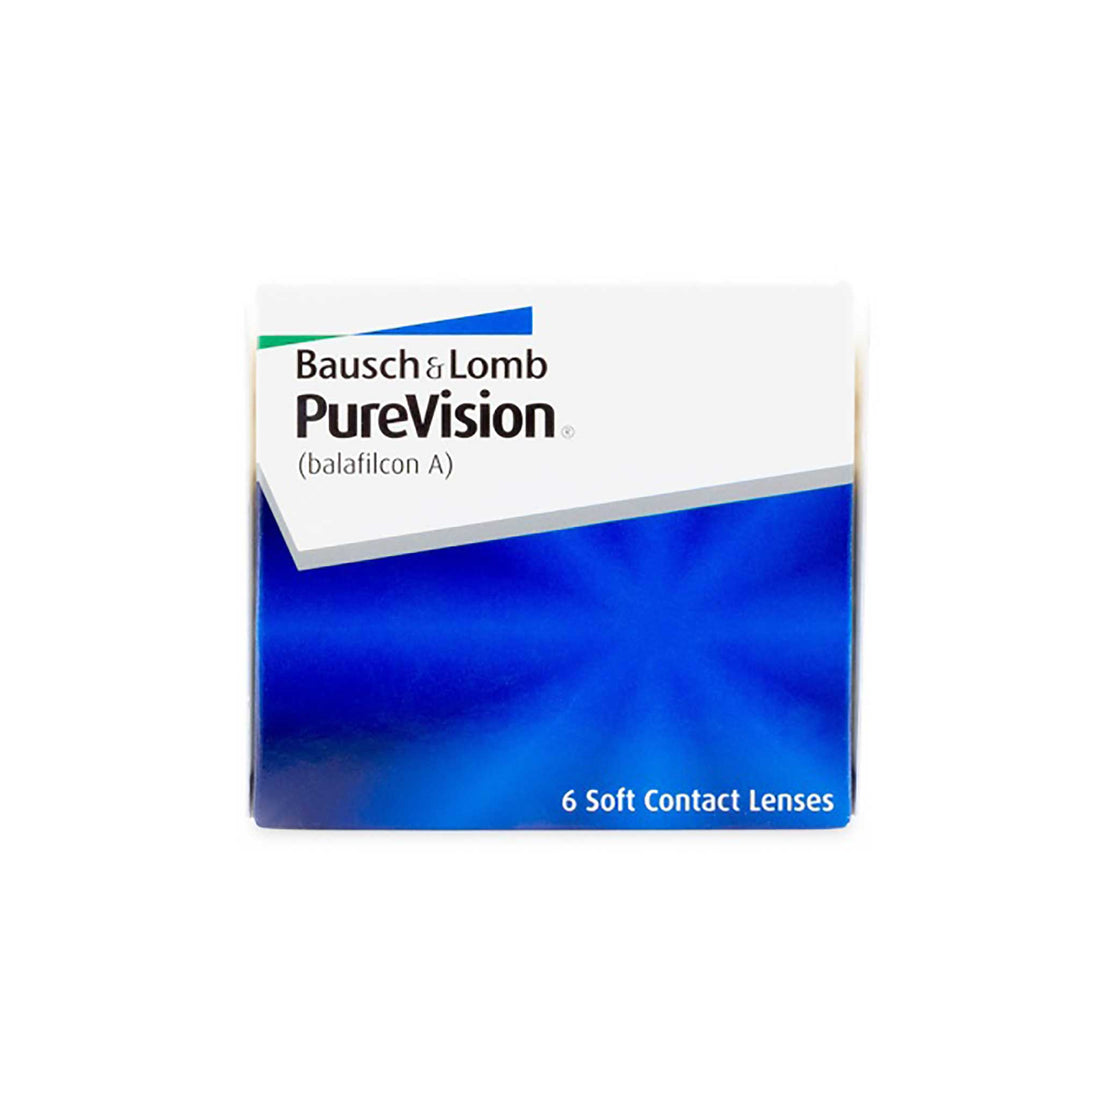 PureVision®